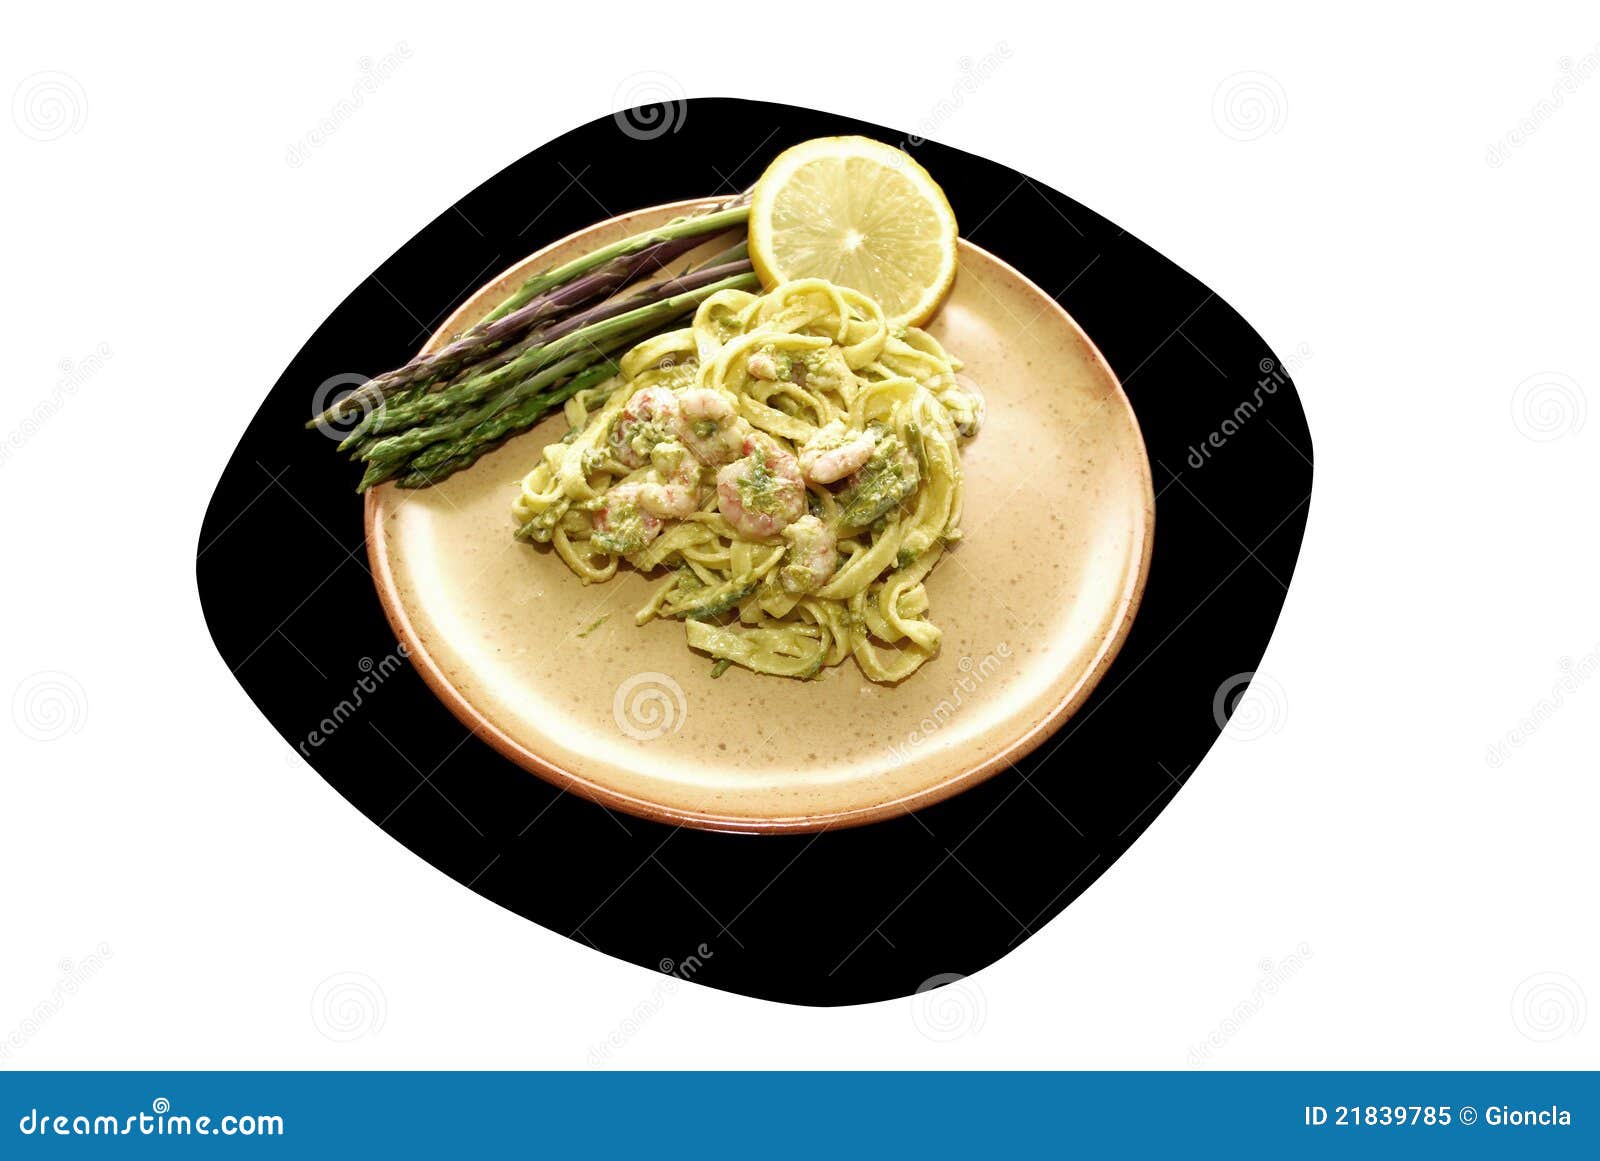 Shrimp with asparagus and egg noodles,ingredient